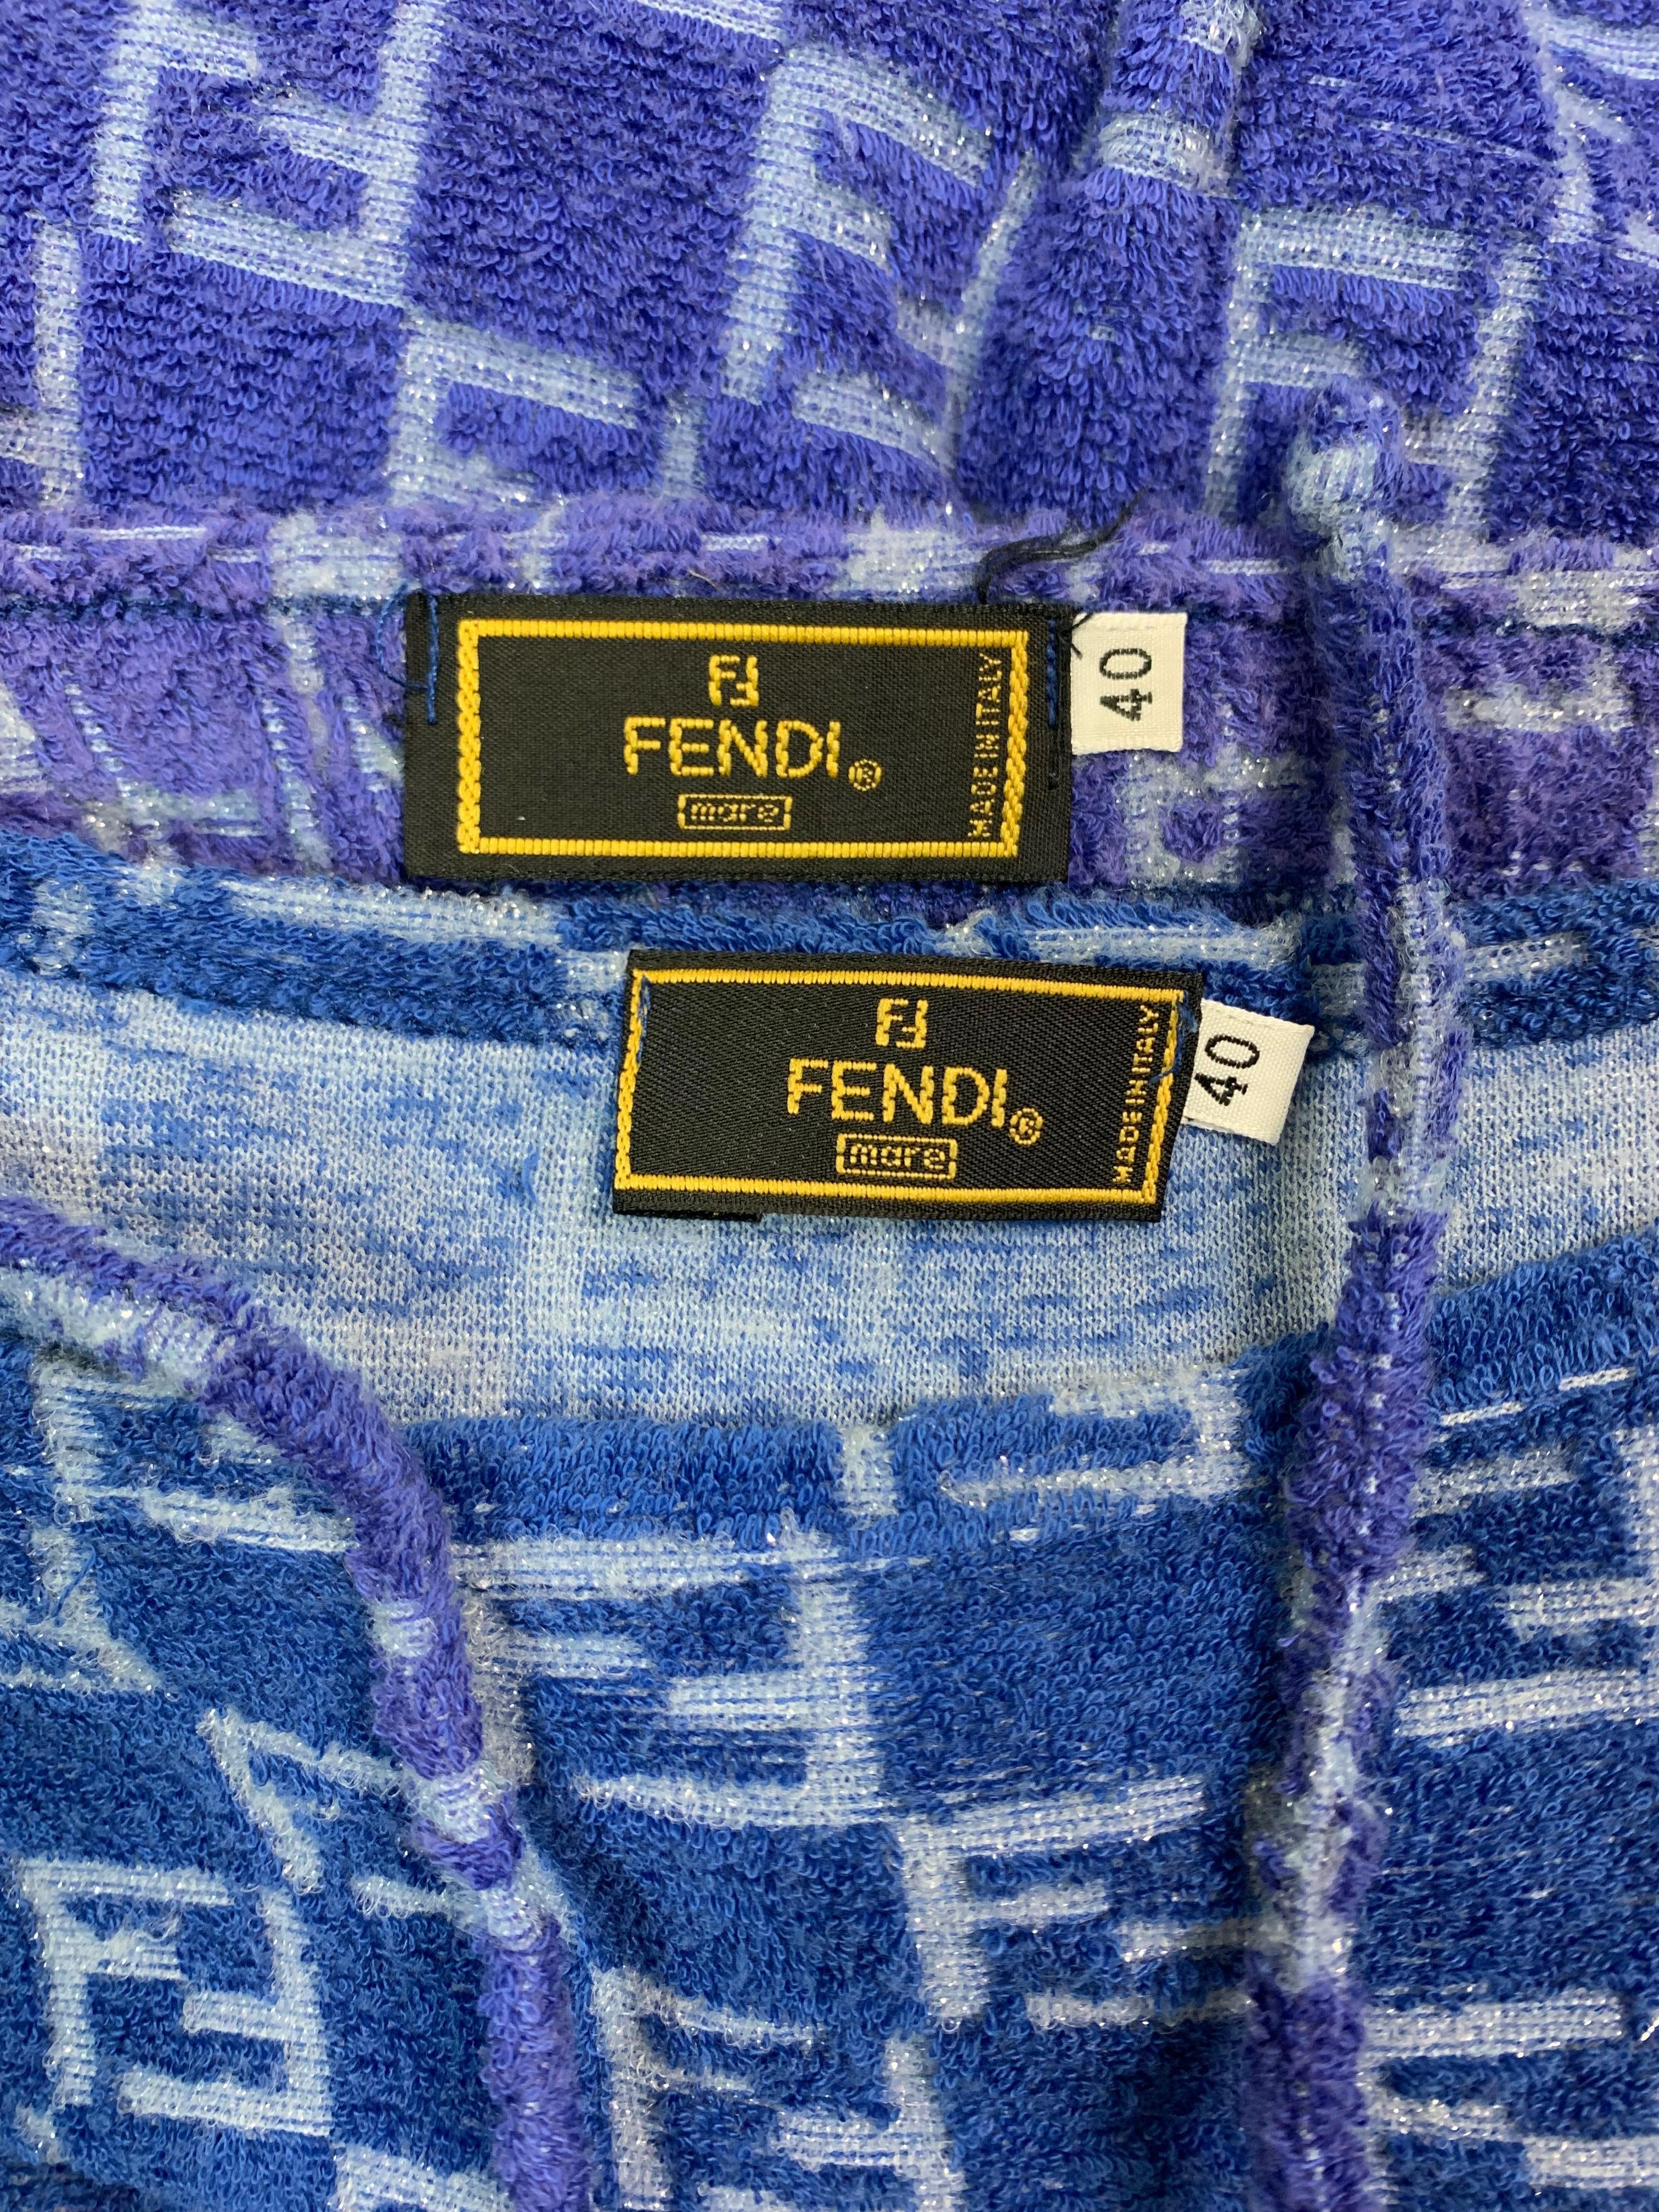 fendi top and skirt